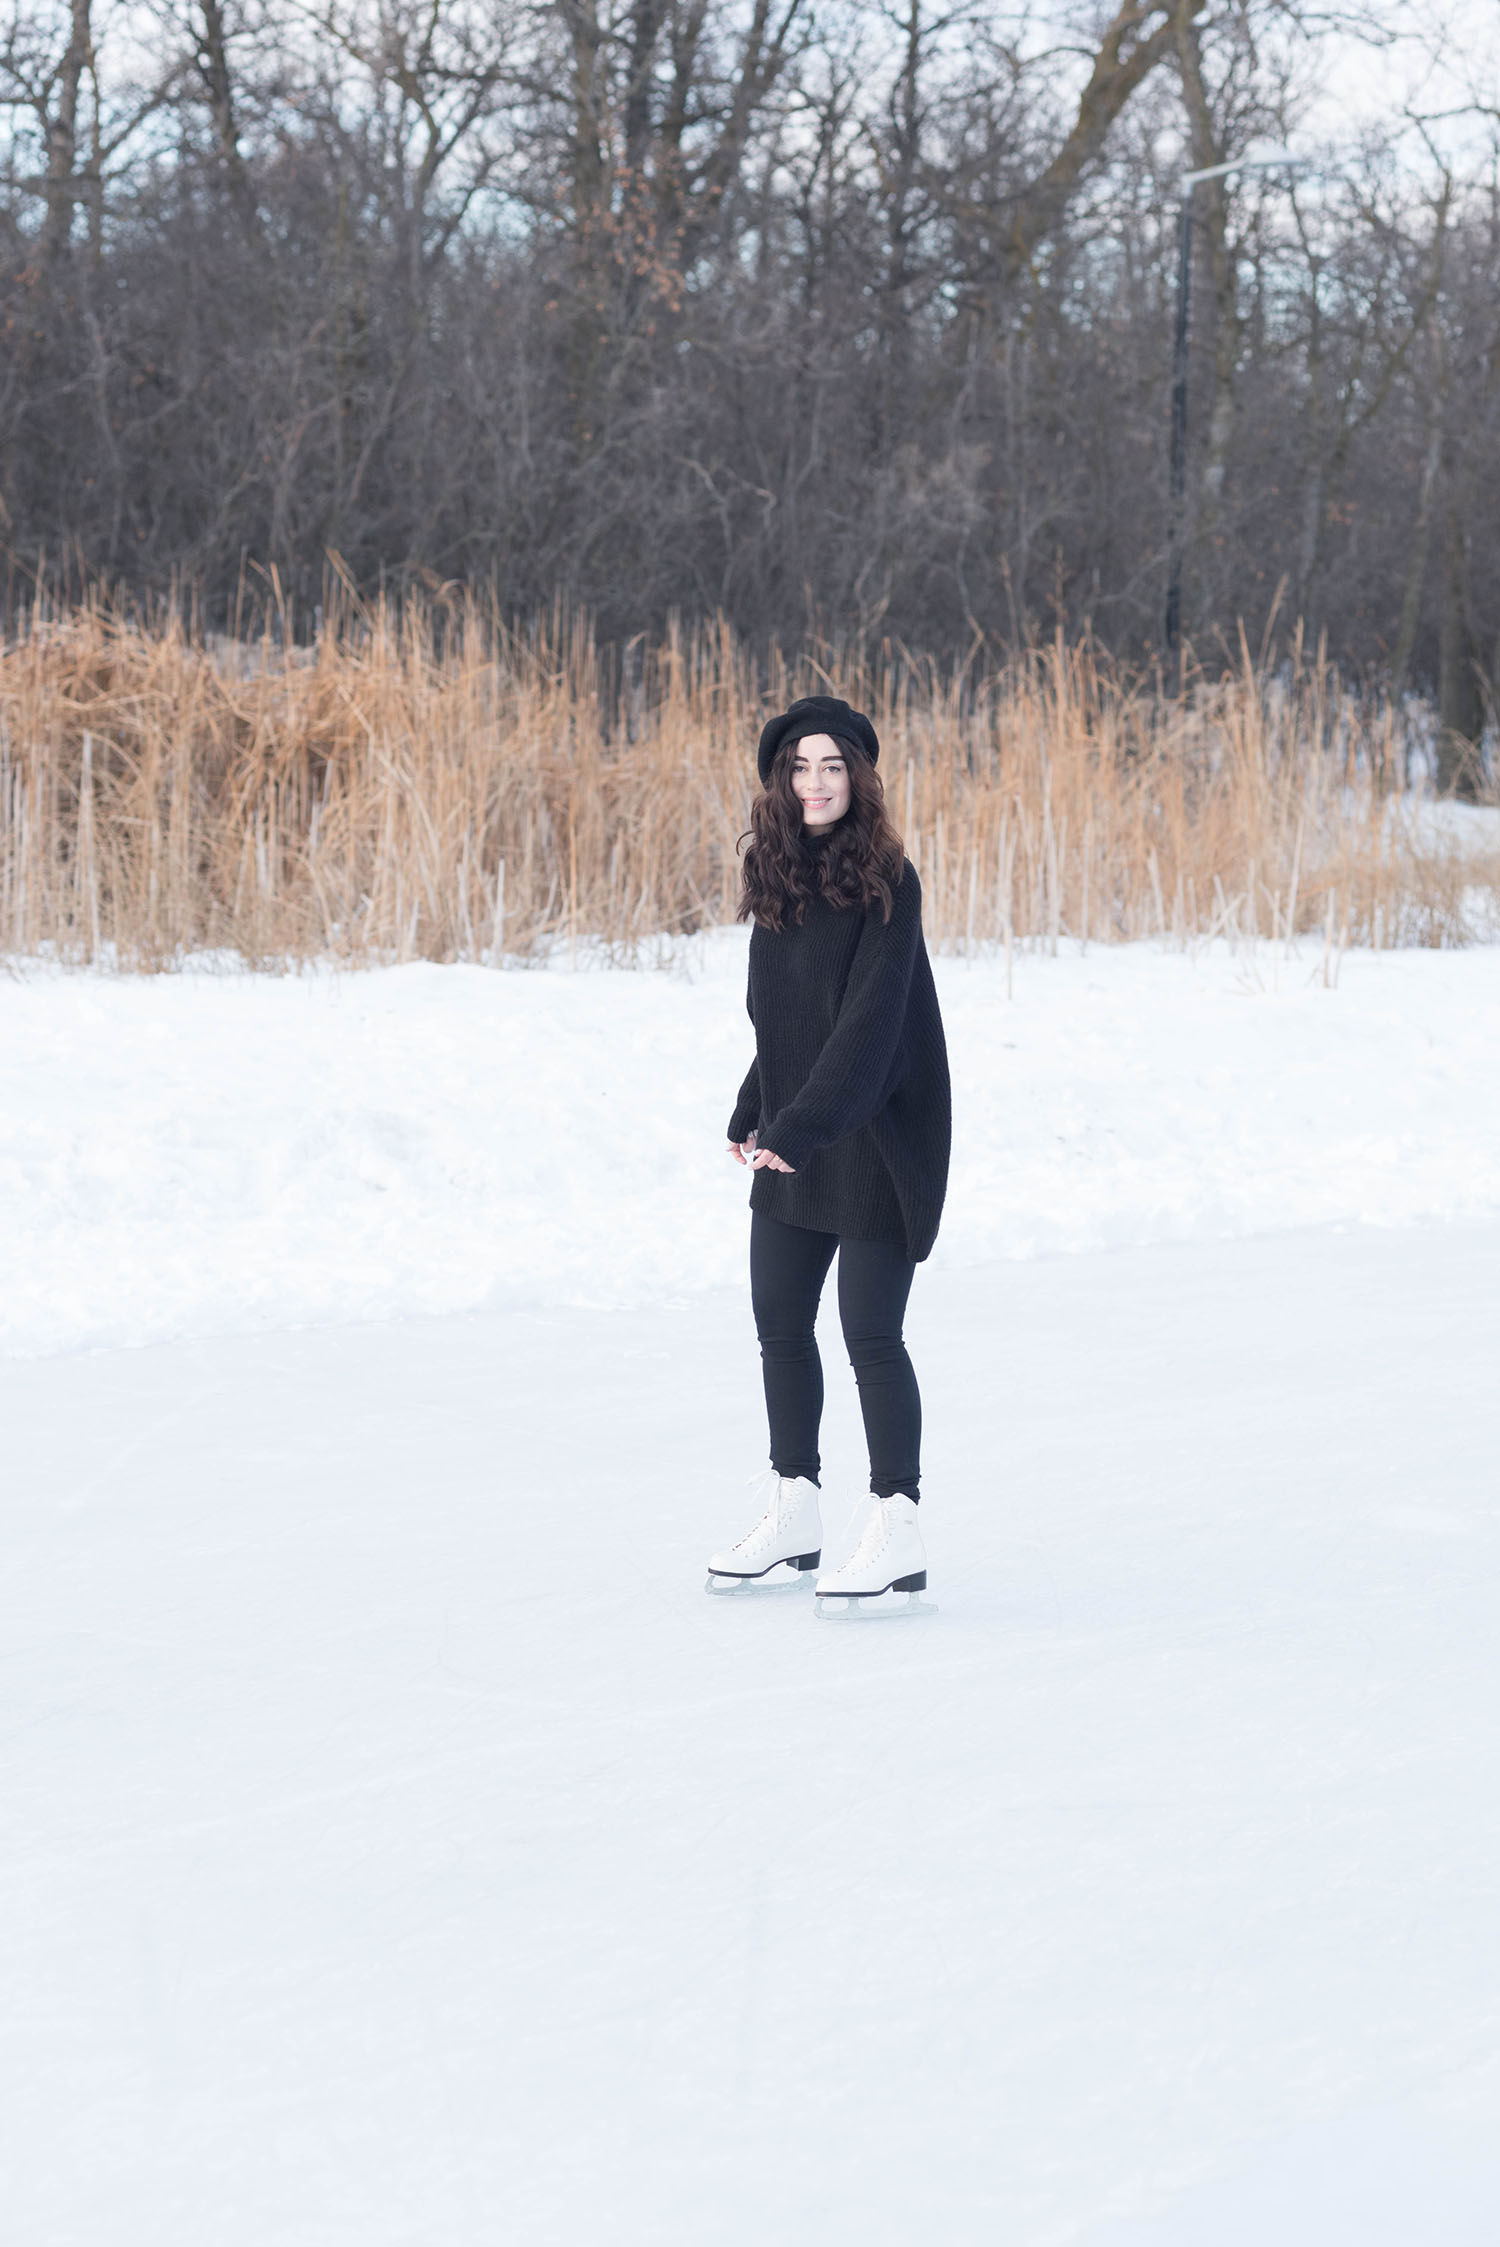 Fashion blogger Cee Fardoe of Coco & Vera skates at Assiniboine Park in Winnipeg wearing an oversized Zara sweater and Anthropologie Bonnie beret